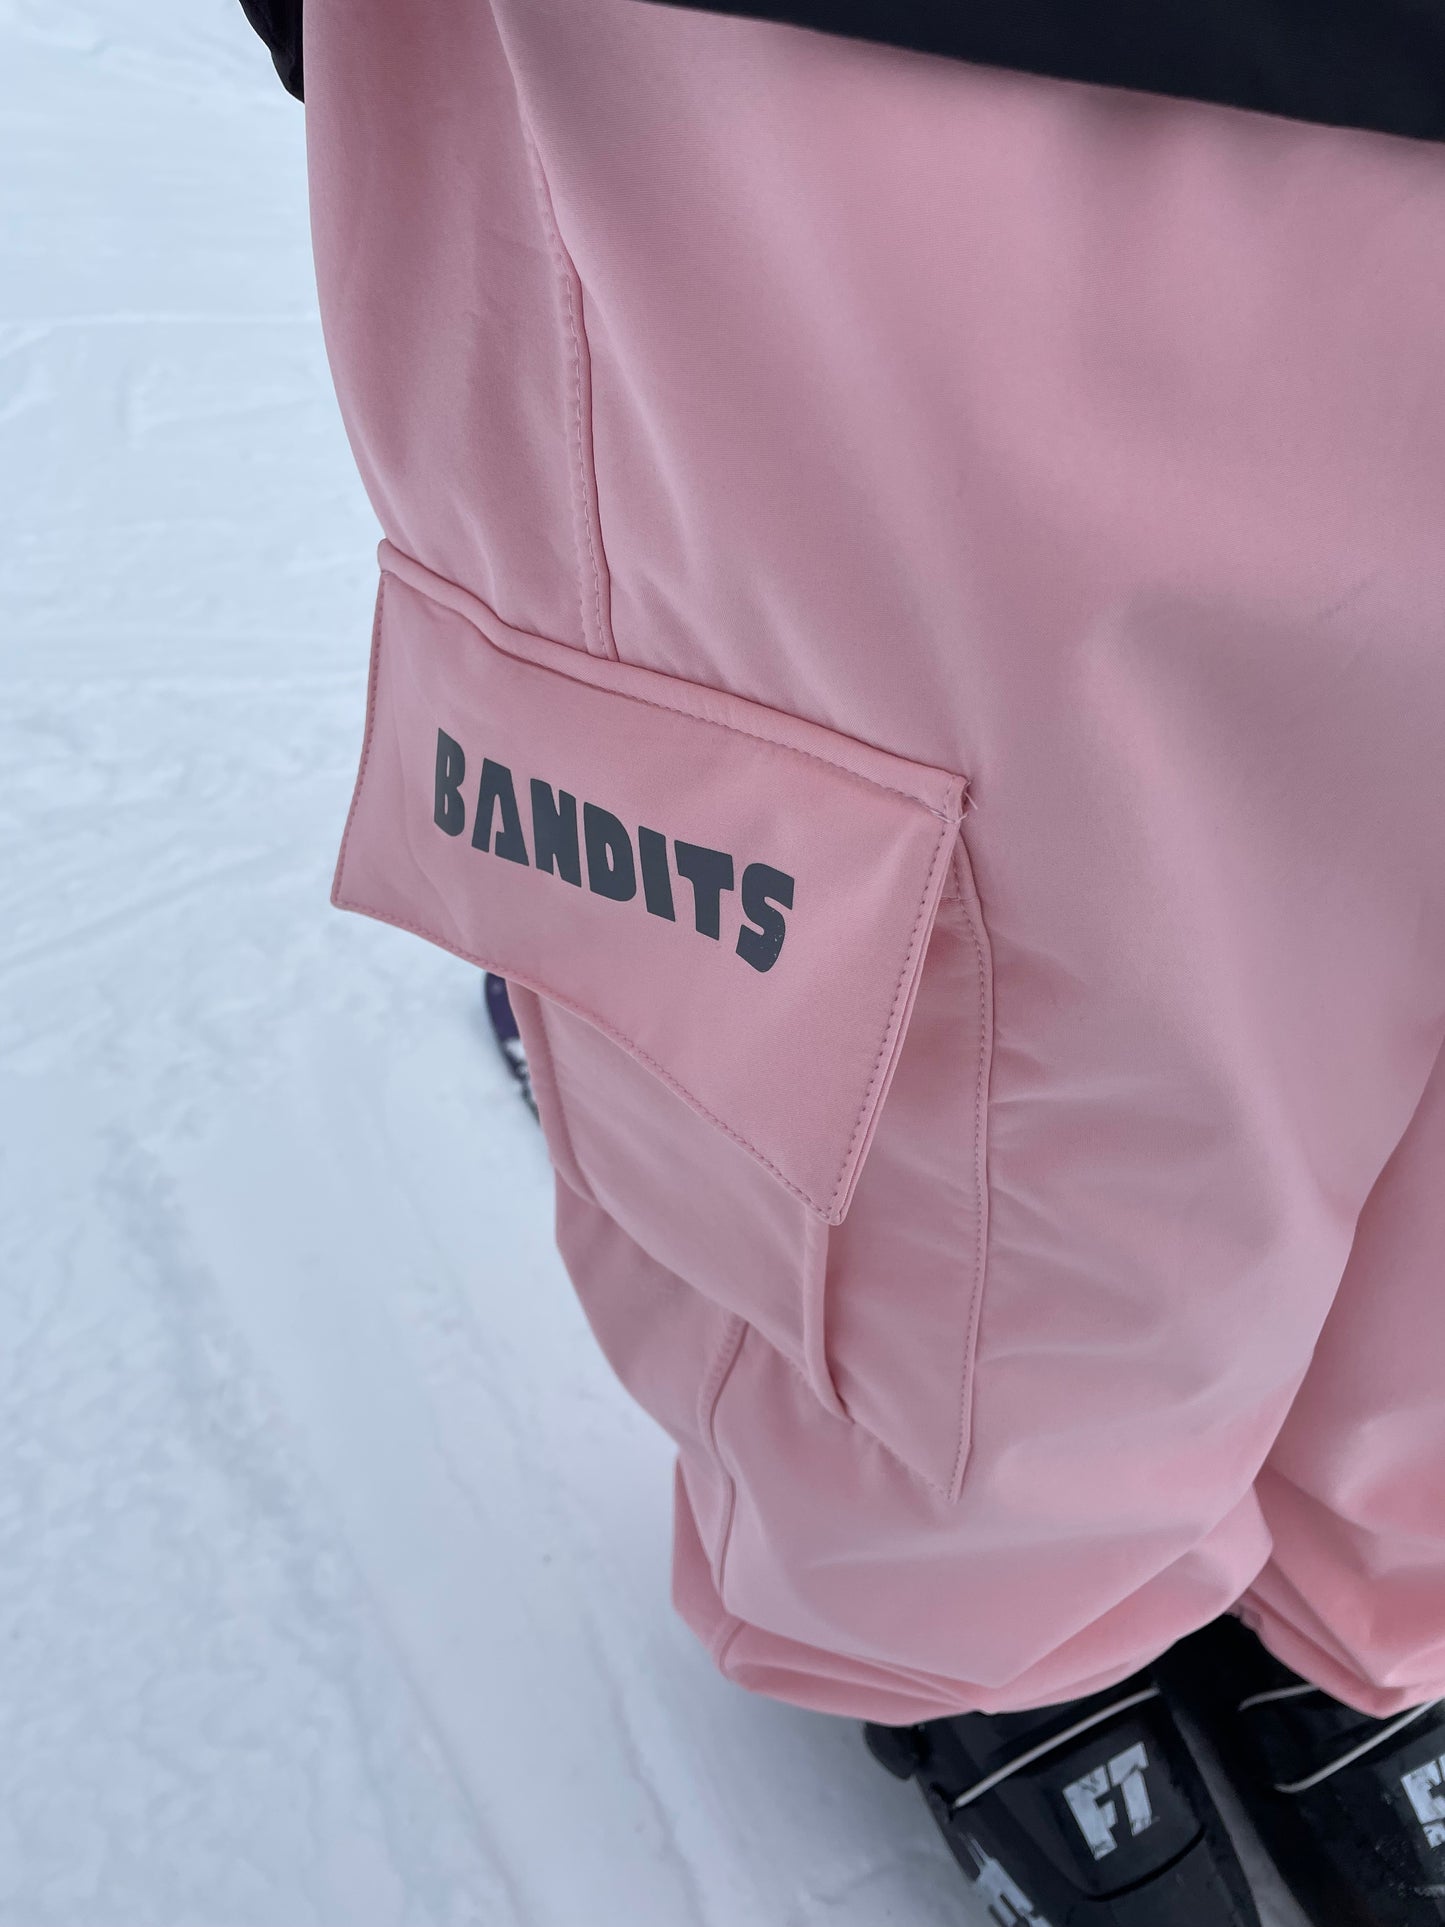 Light Pink Baggy Snow Pants